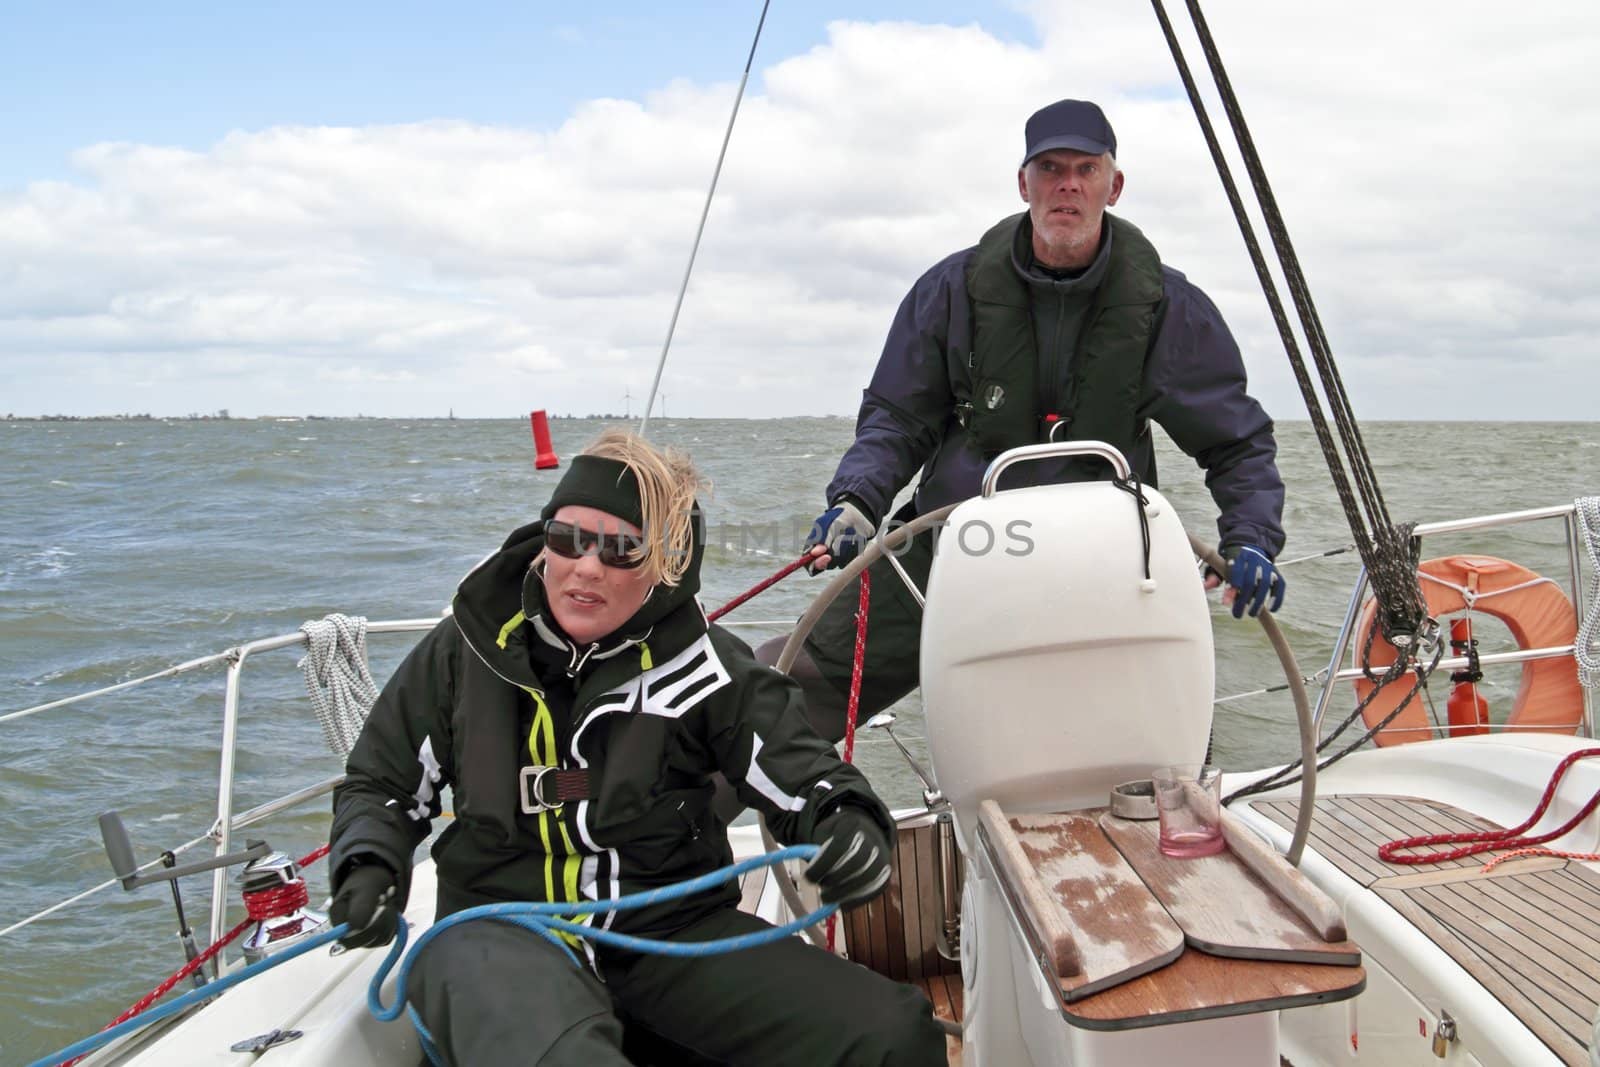 sailing on the IJsselmeer in the Netherlands by devy